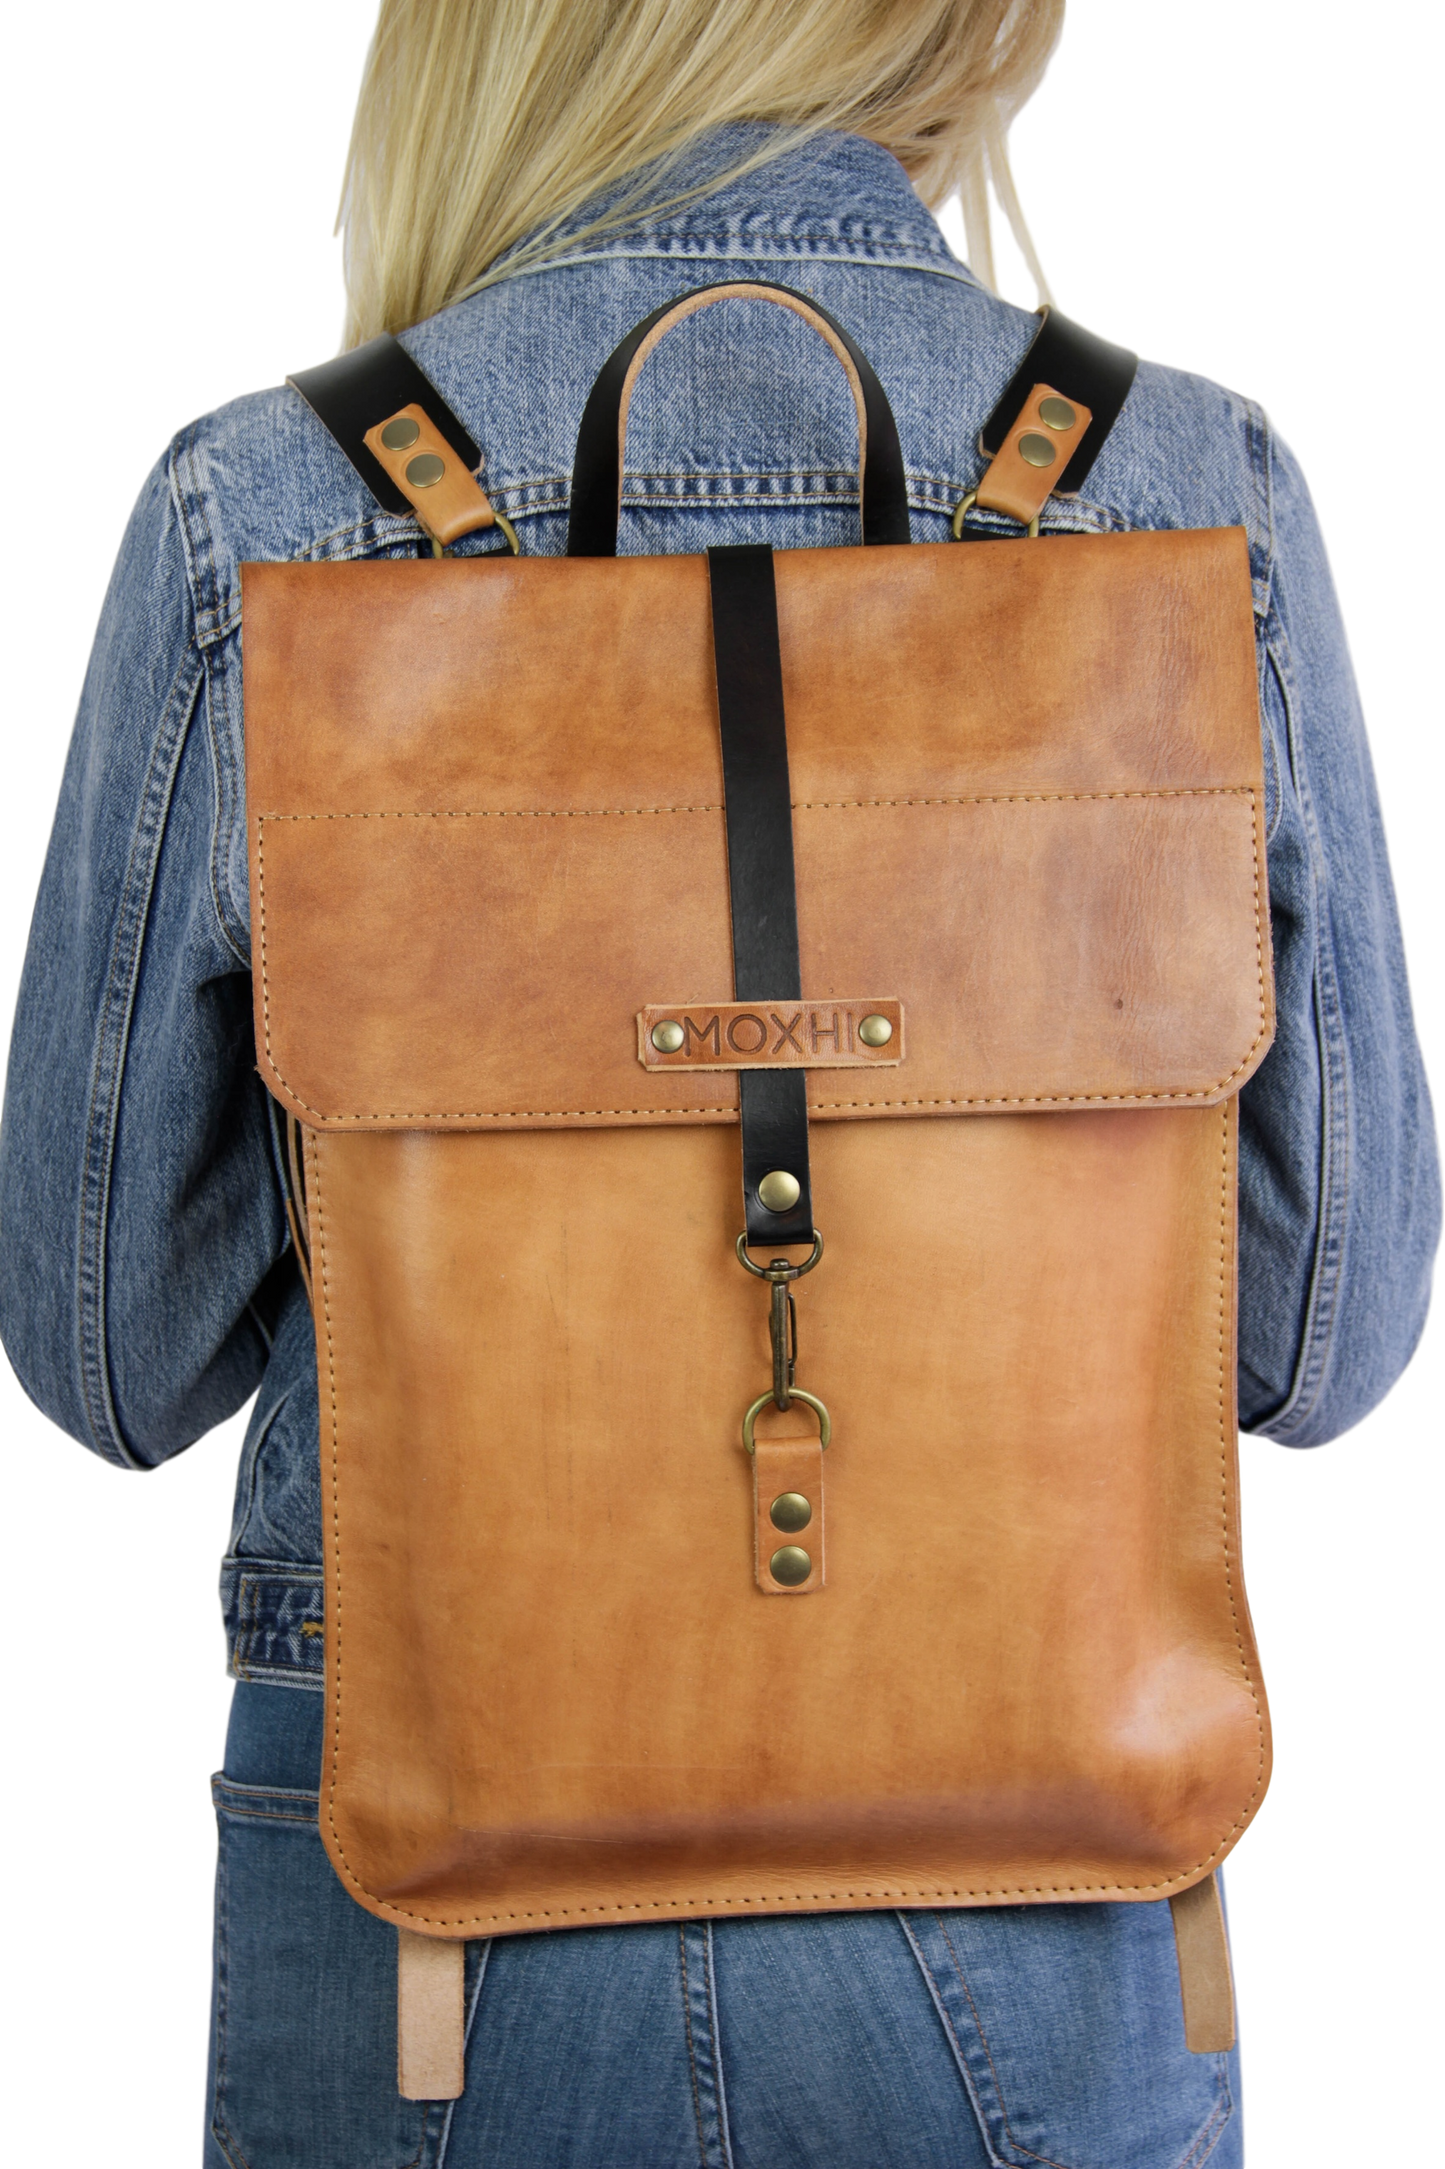 Fair trade leather backpack handmade